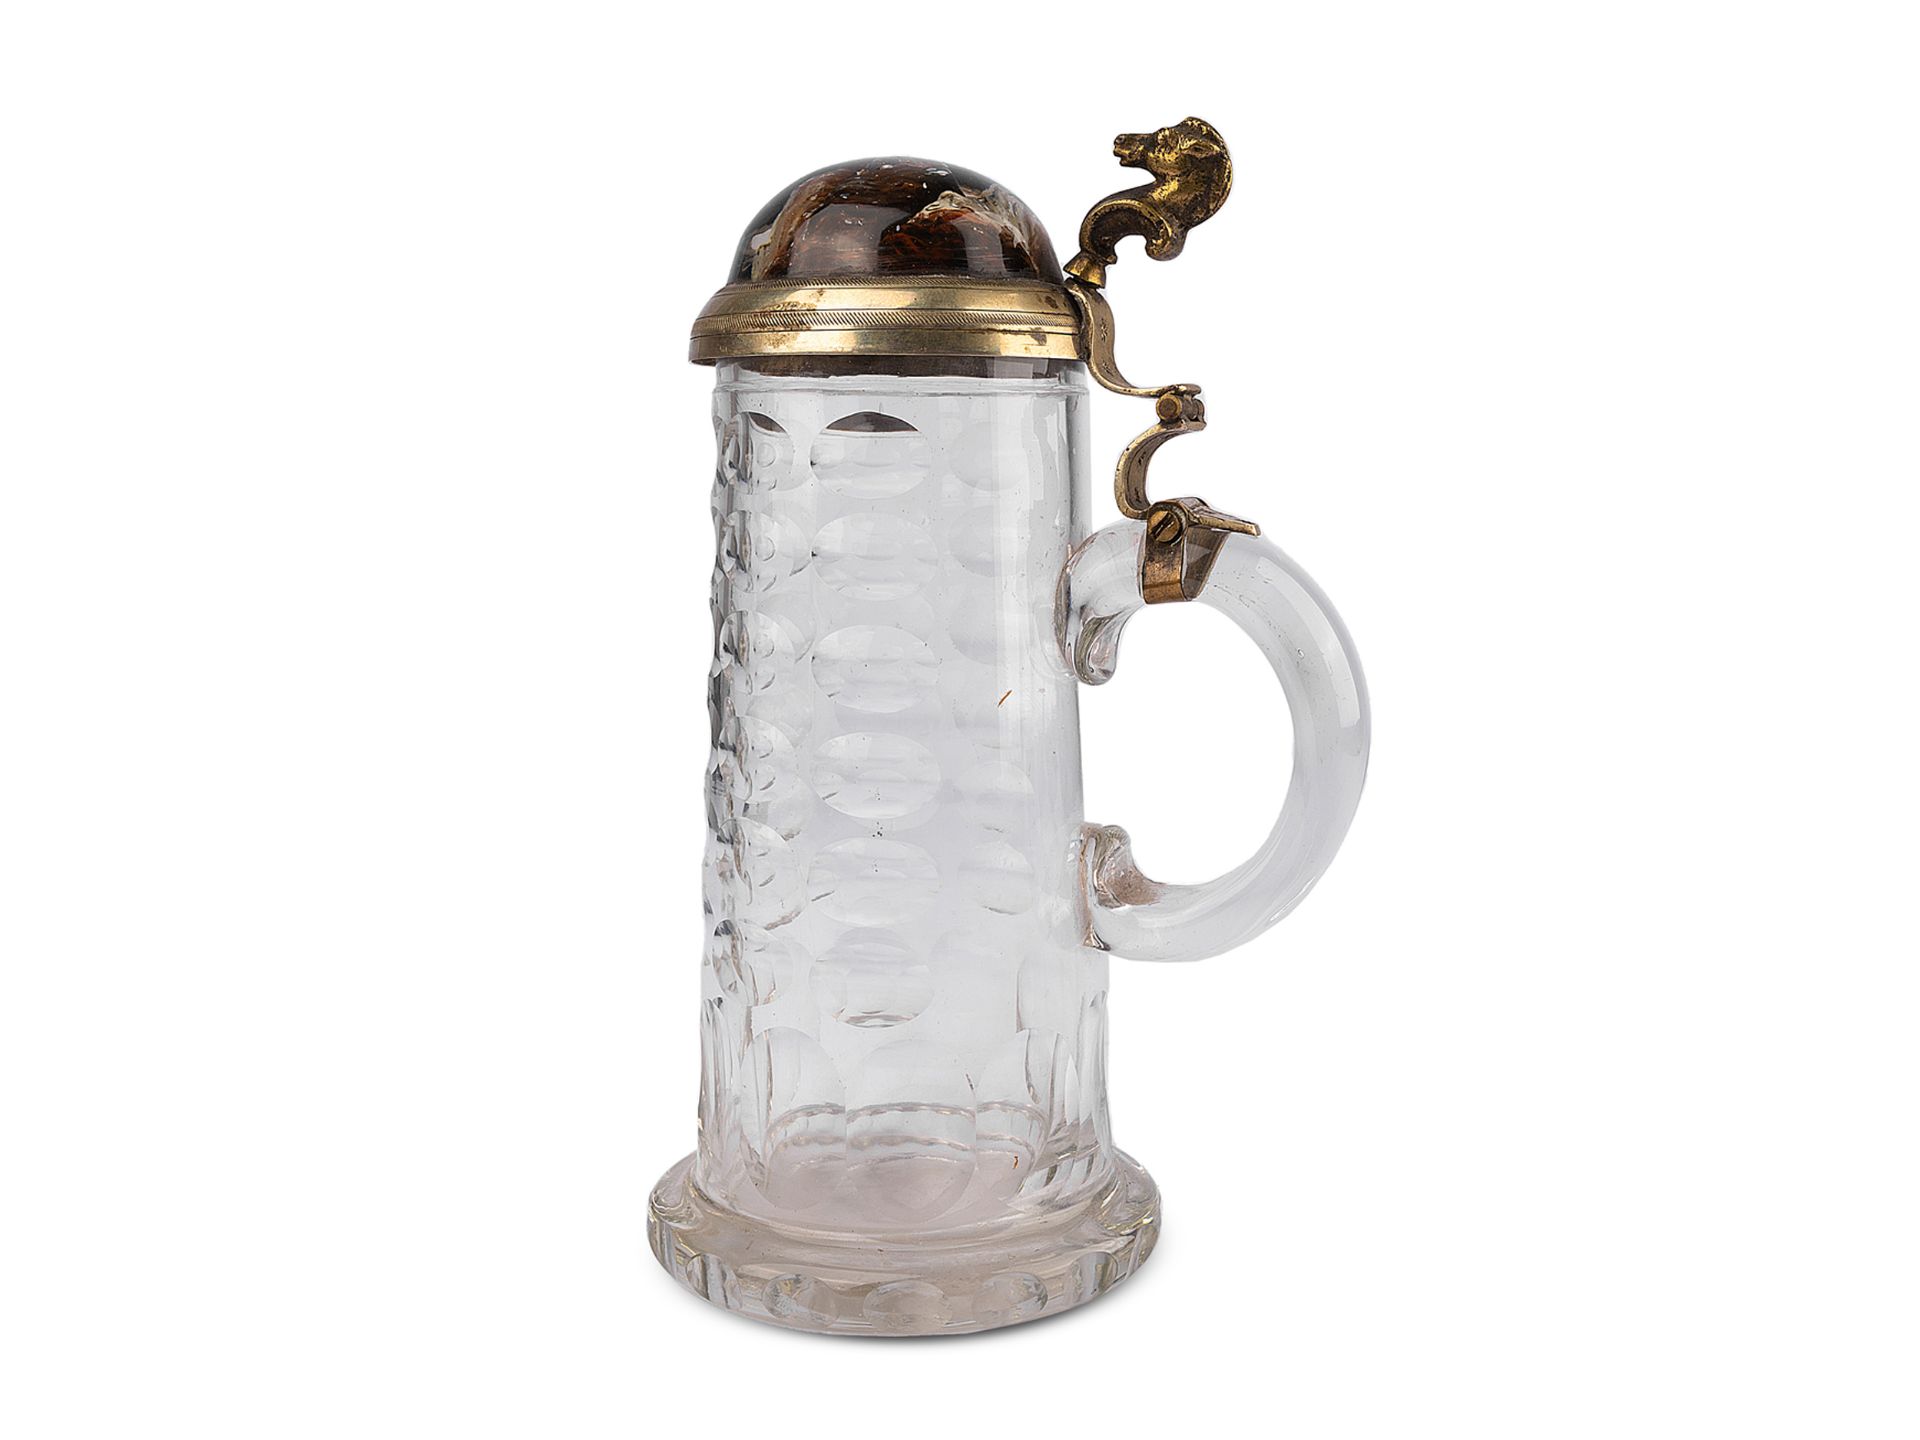 Beer jug with dog head, Glass